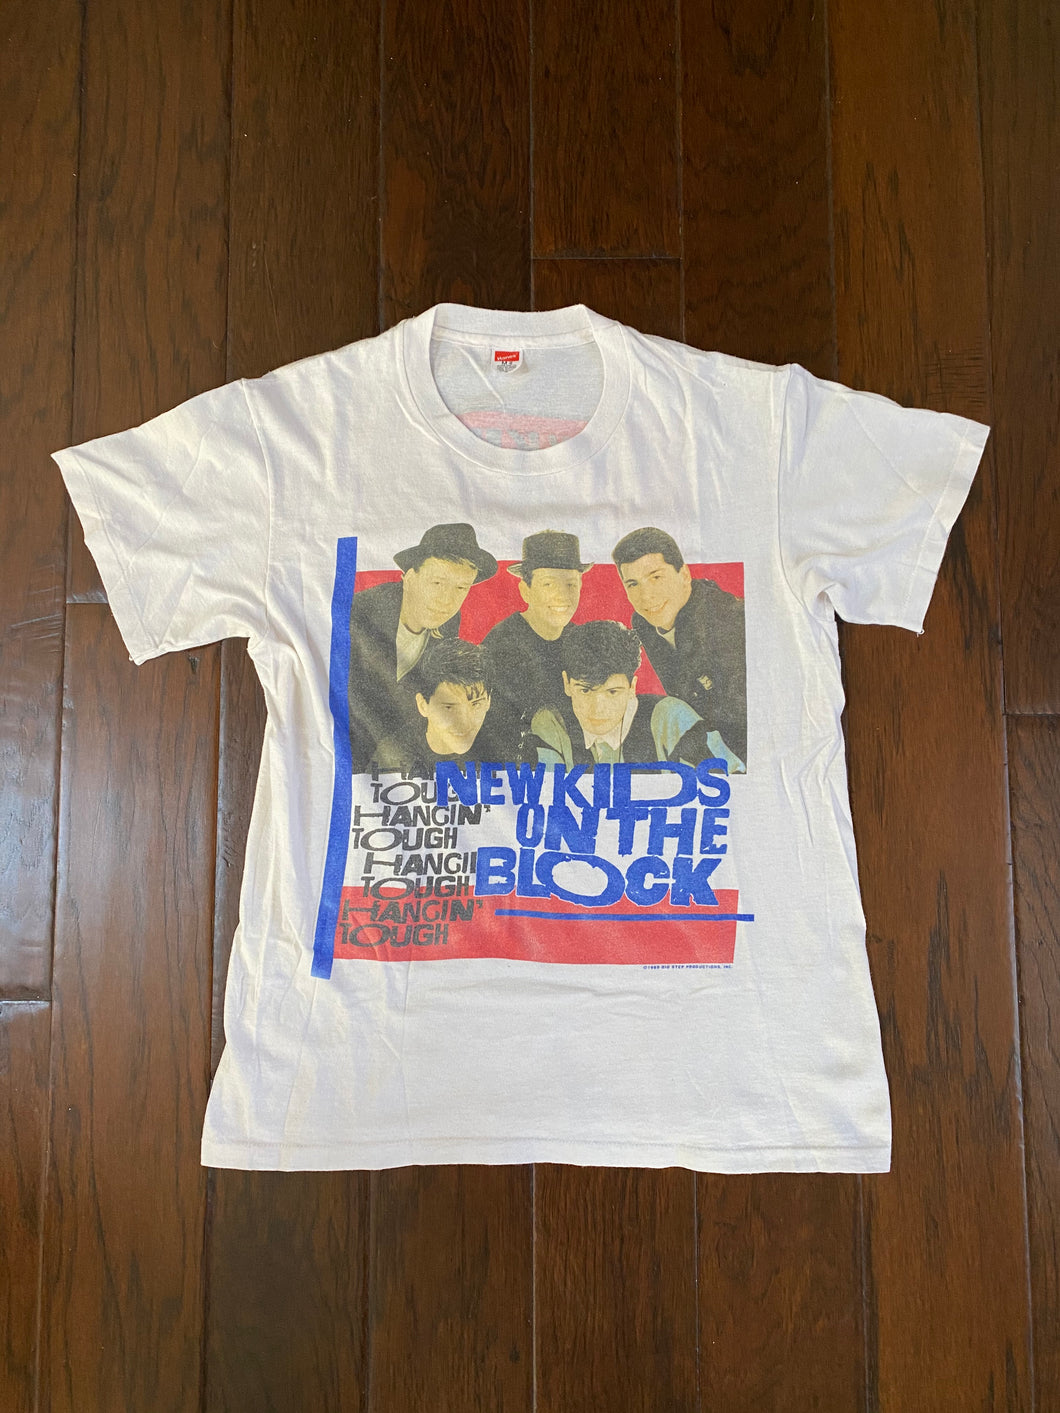 New Kids On The Block 1989 “Hangin Tough” Vintage Distressed T-shirt